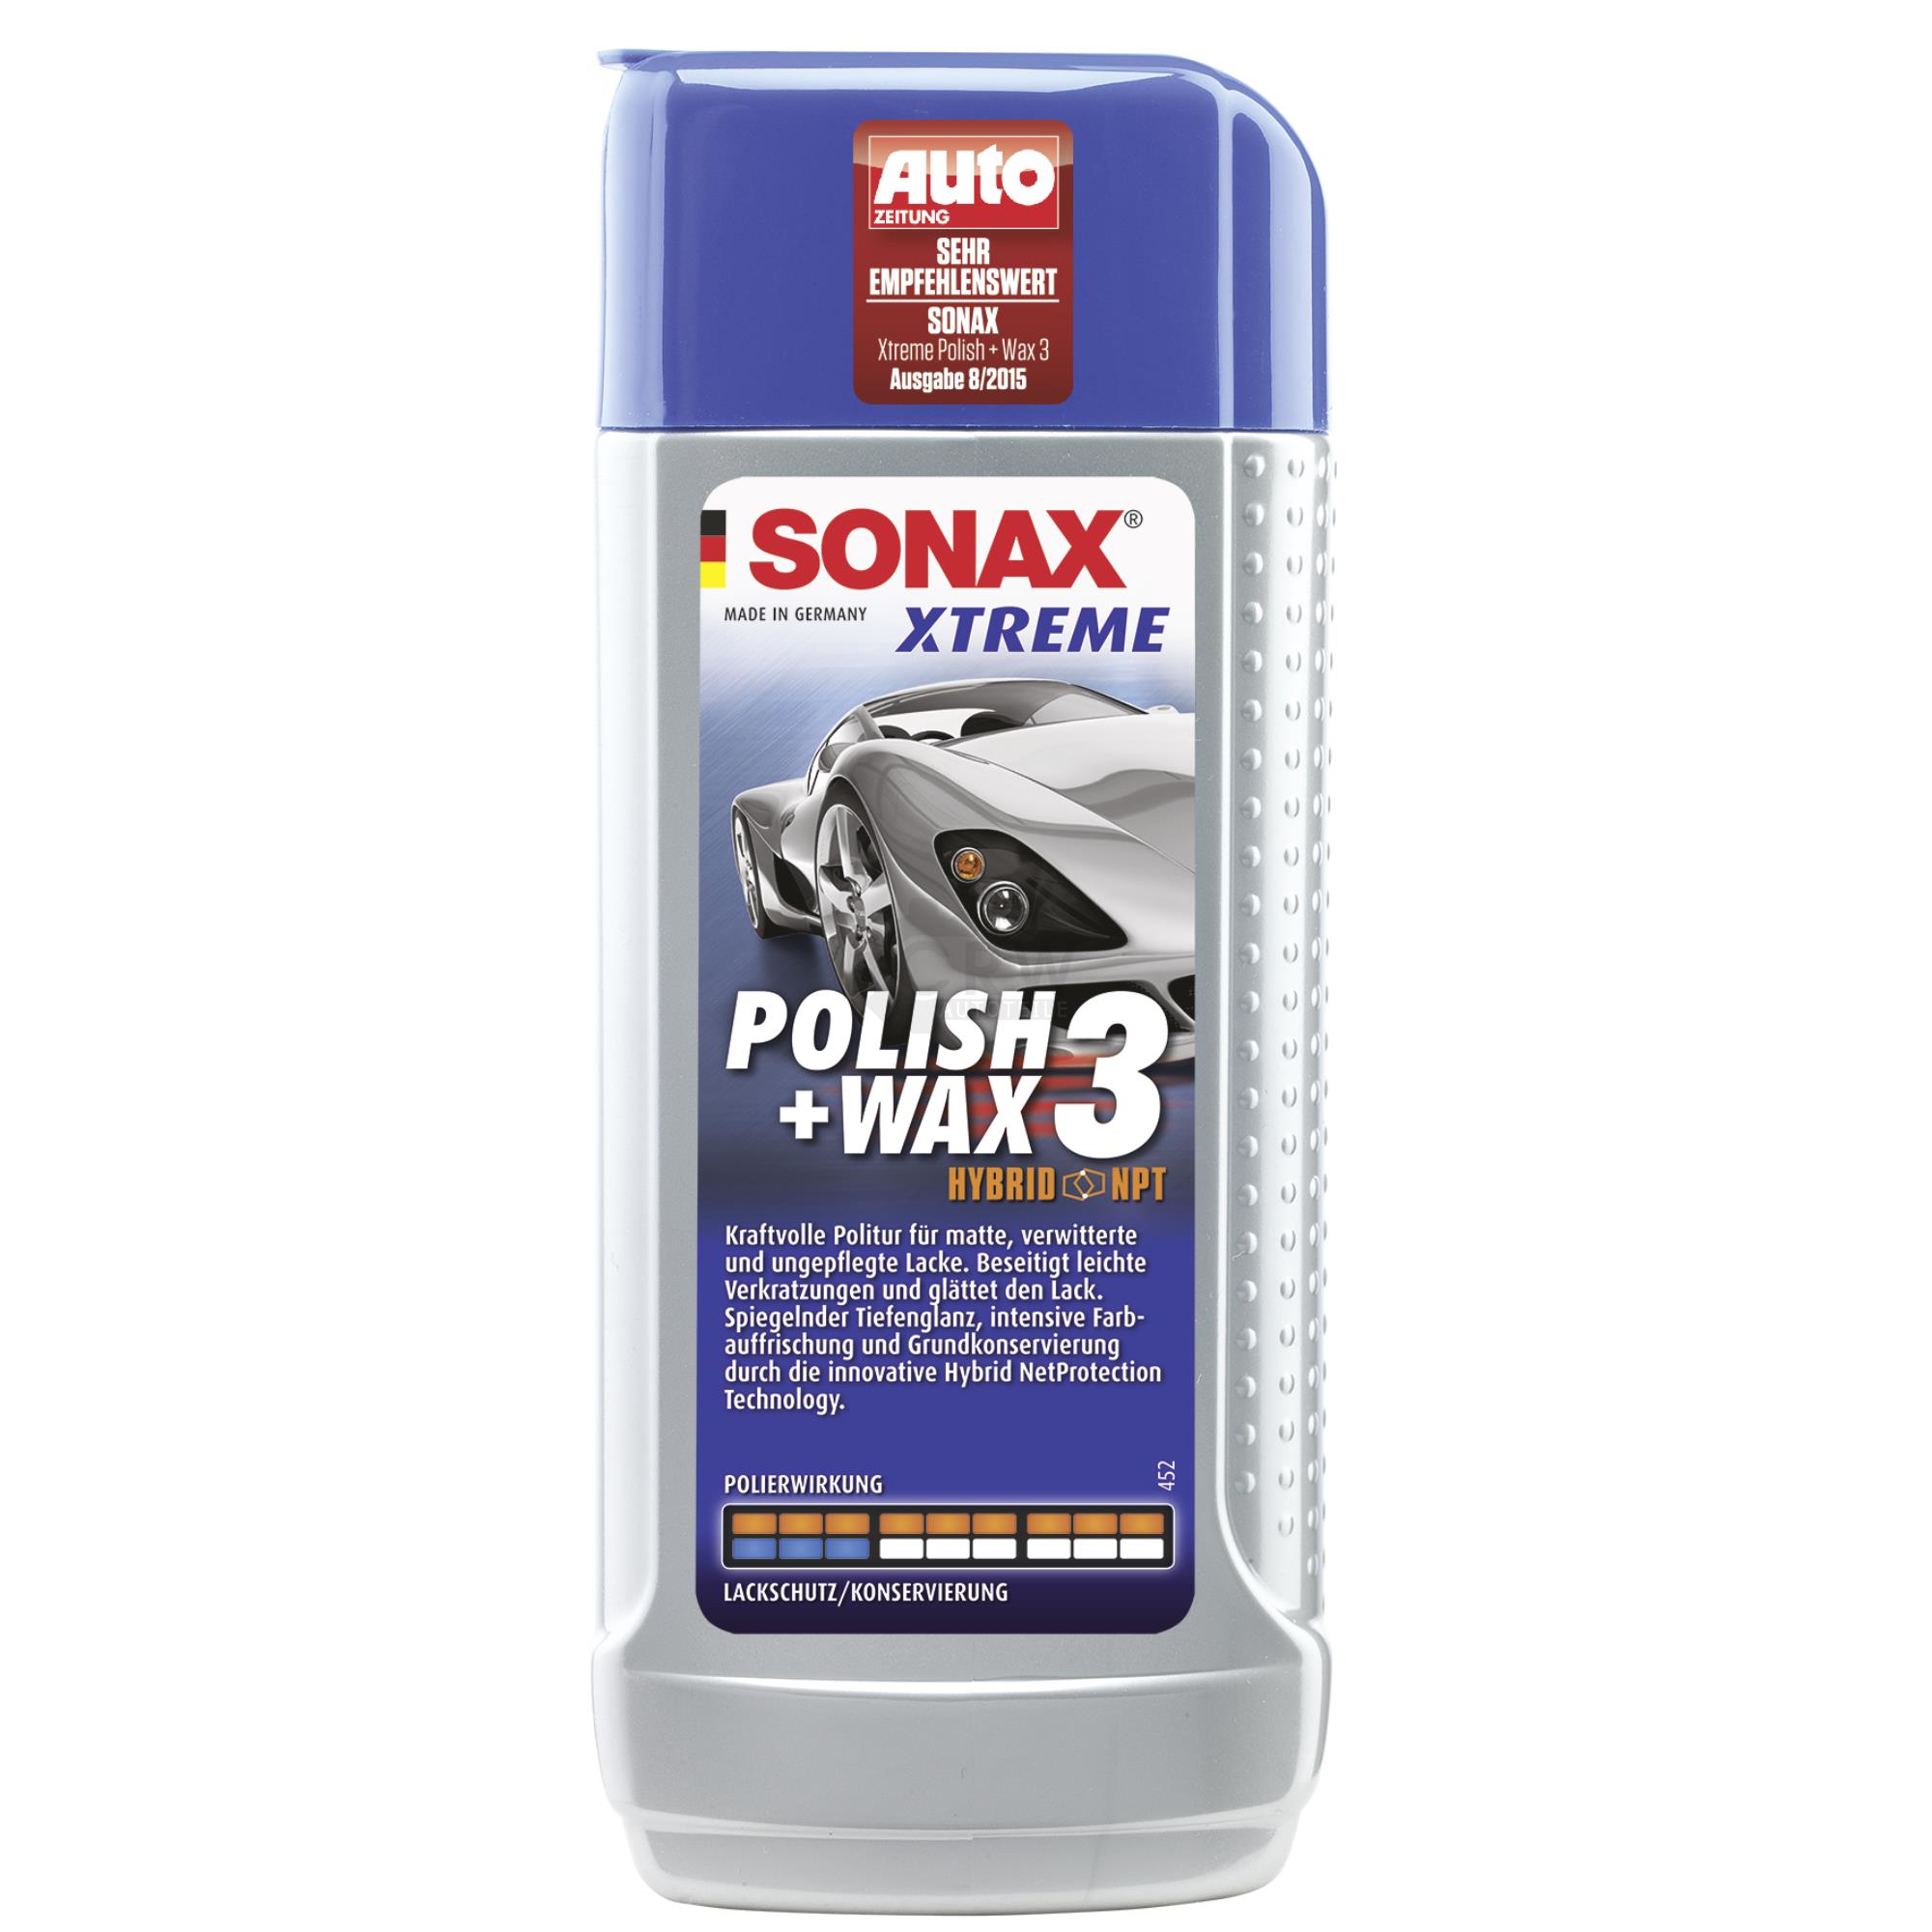 SONAX 02021000 XTREME Polish+Wax 3 Hybrid NPT Politur Wachs 250 ml